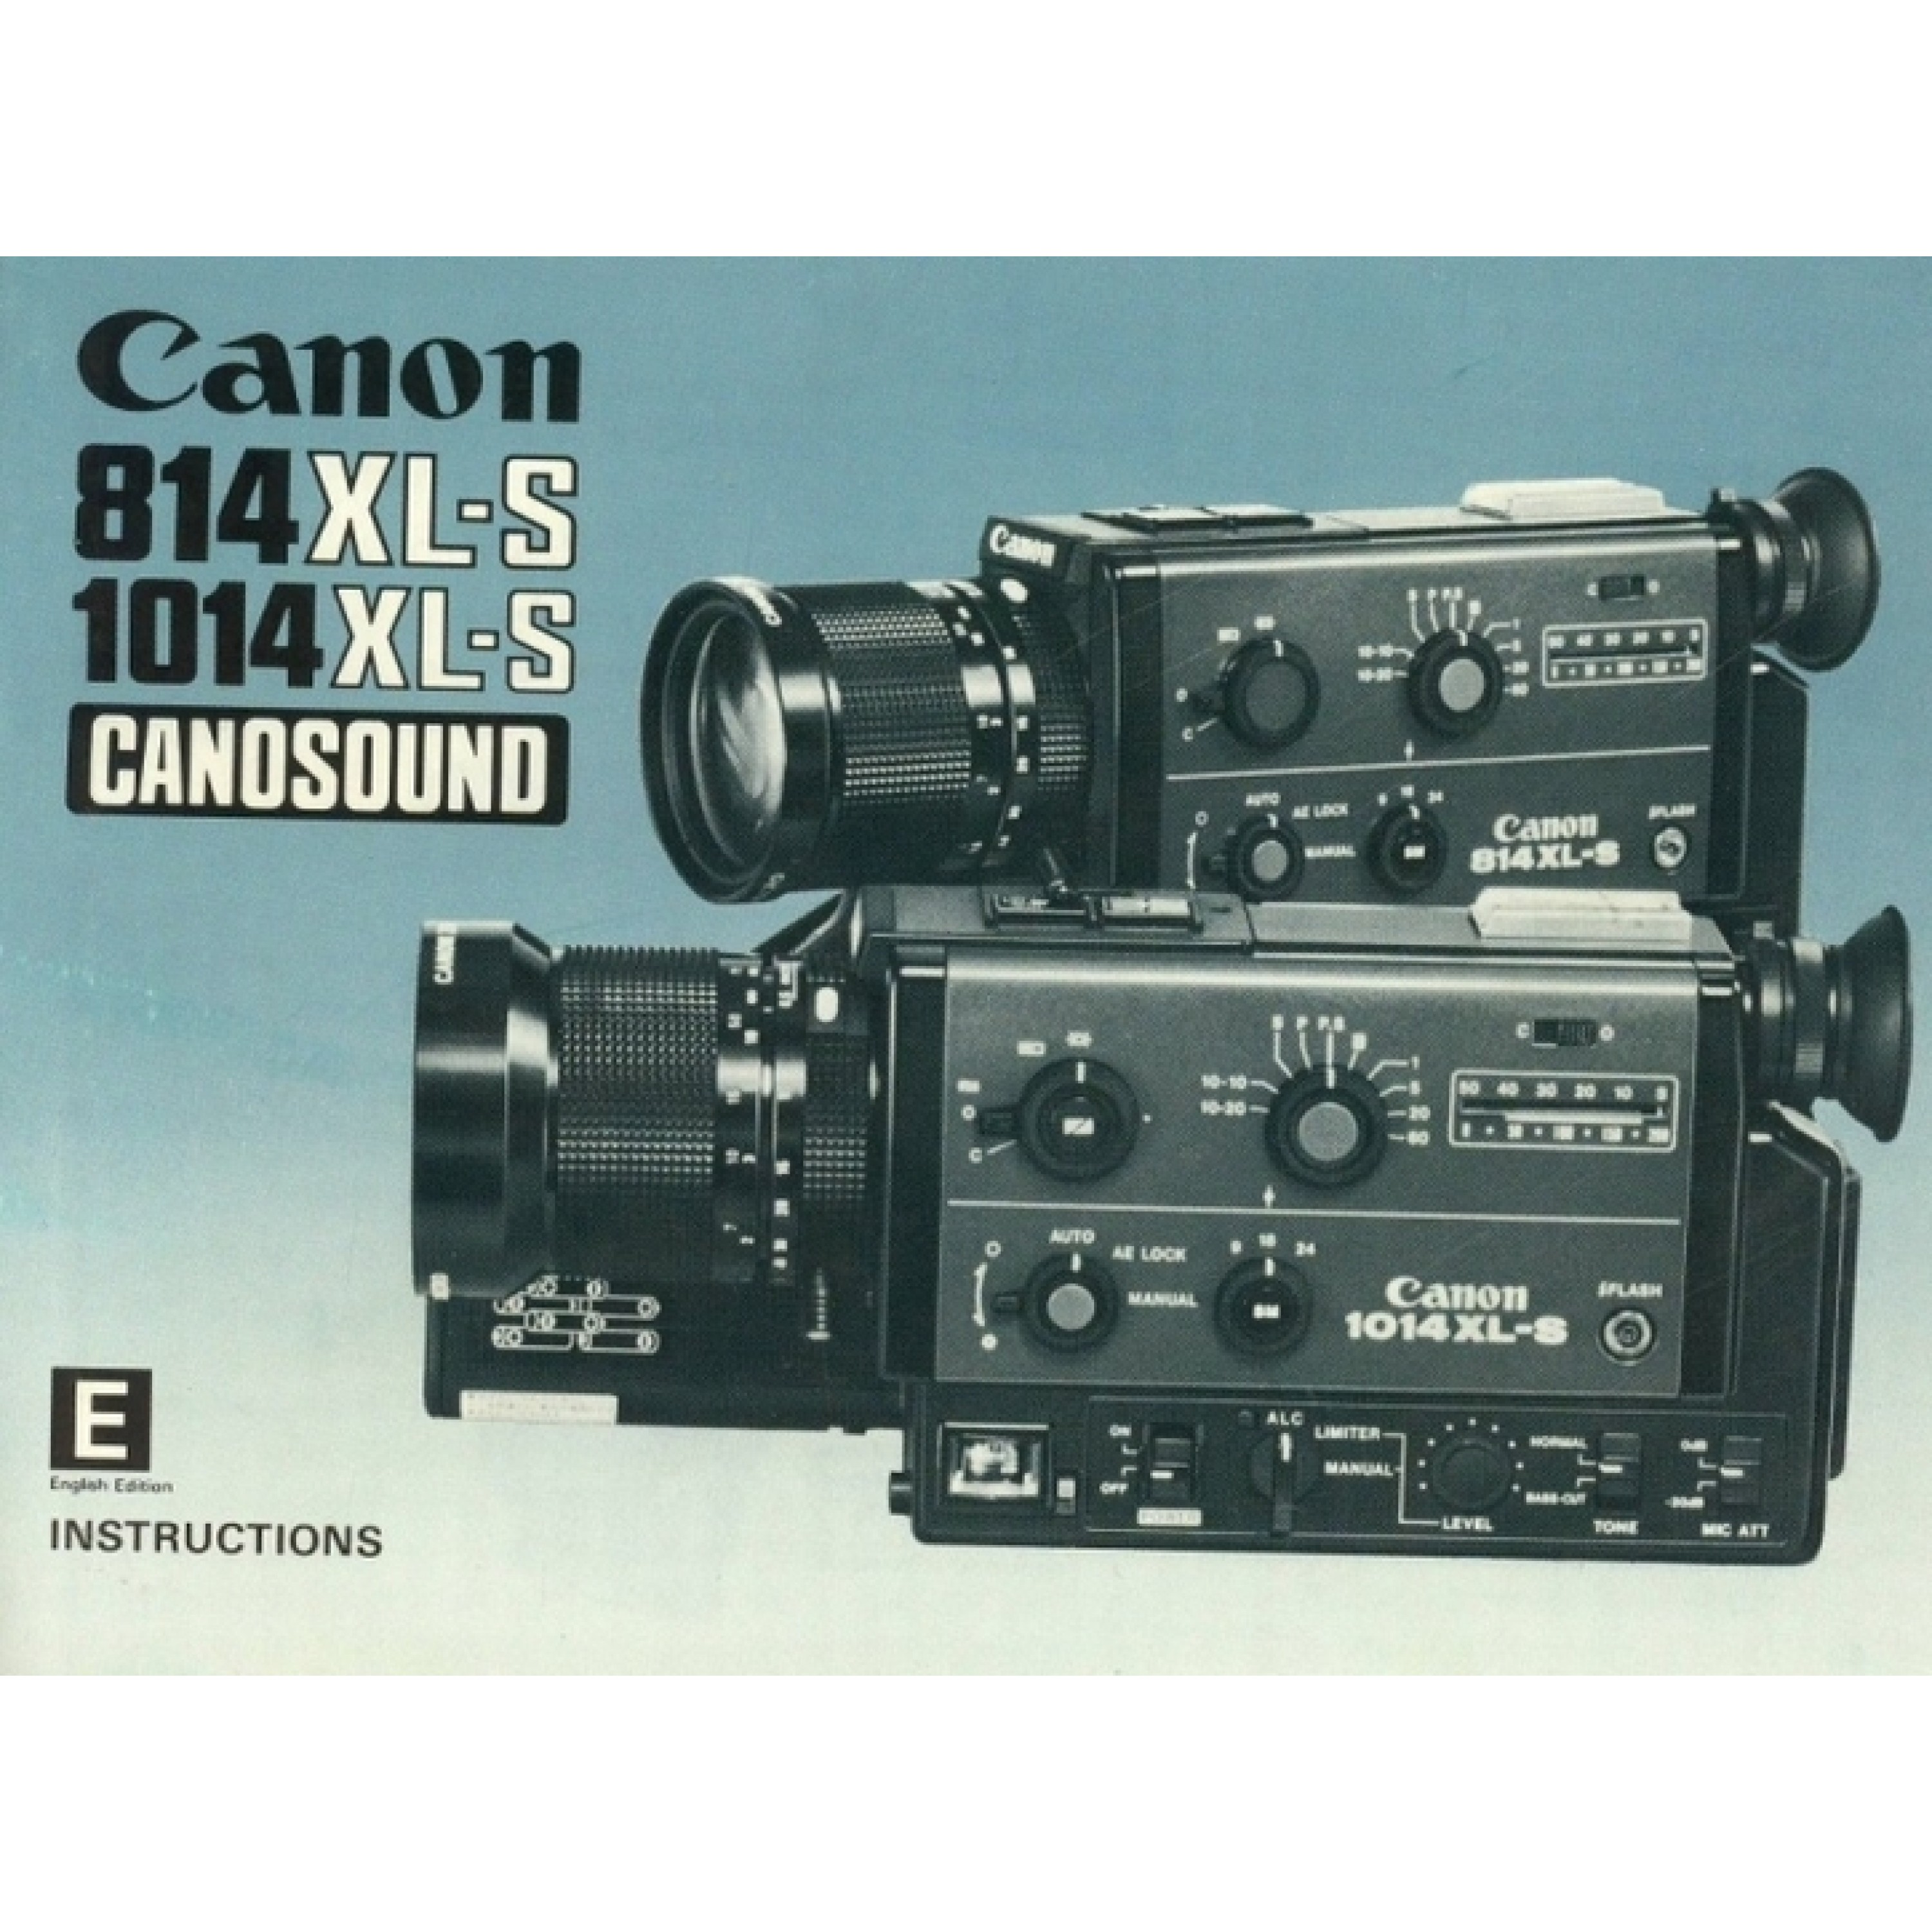 Canon 814 XL-S CANOSOUND-